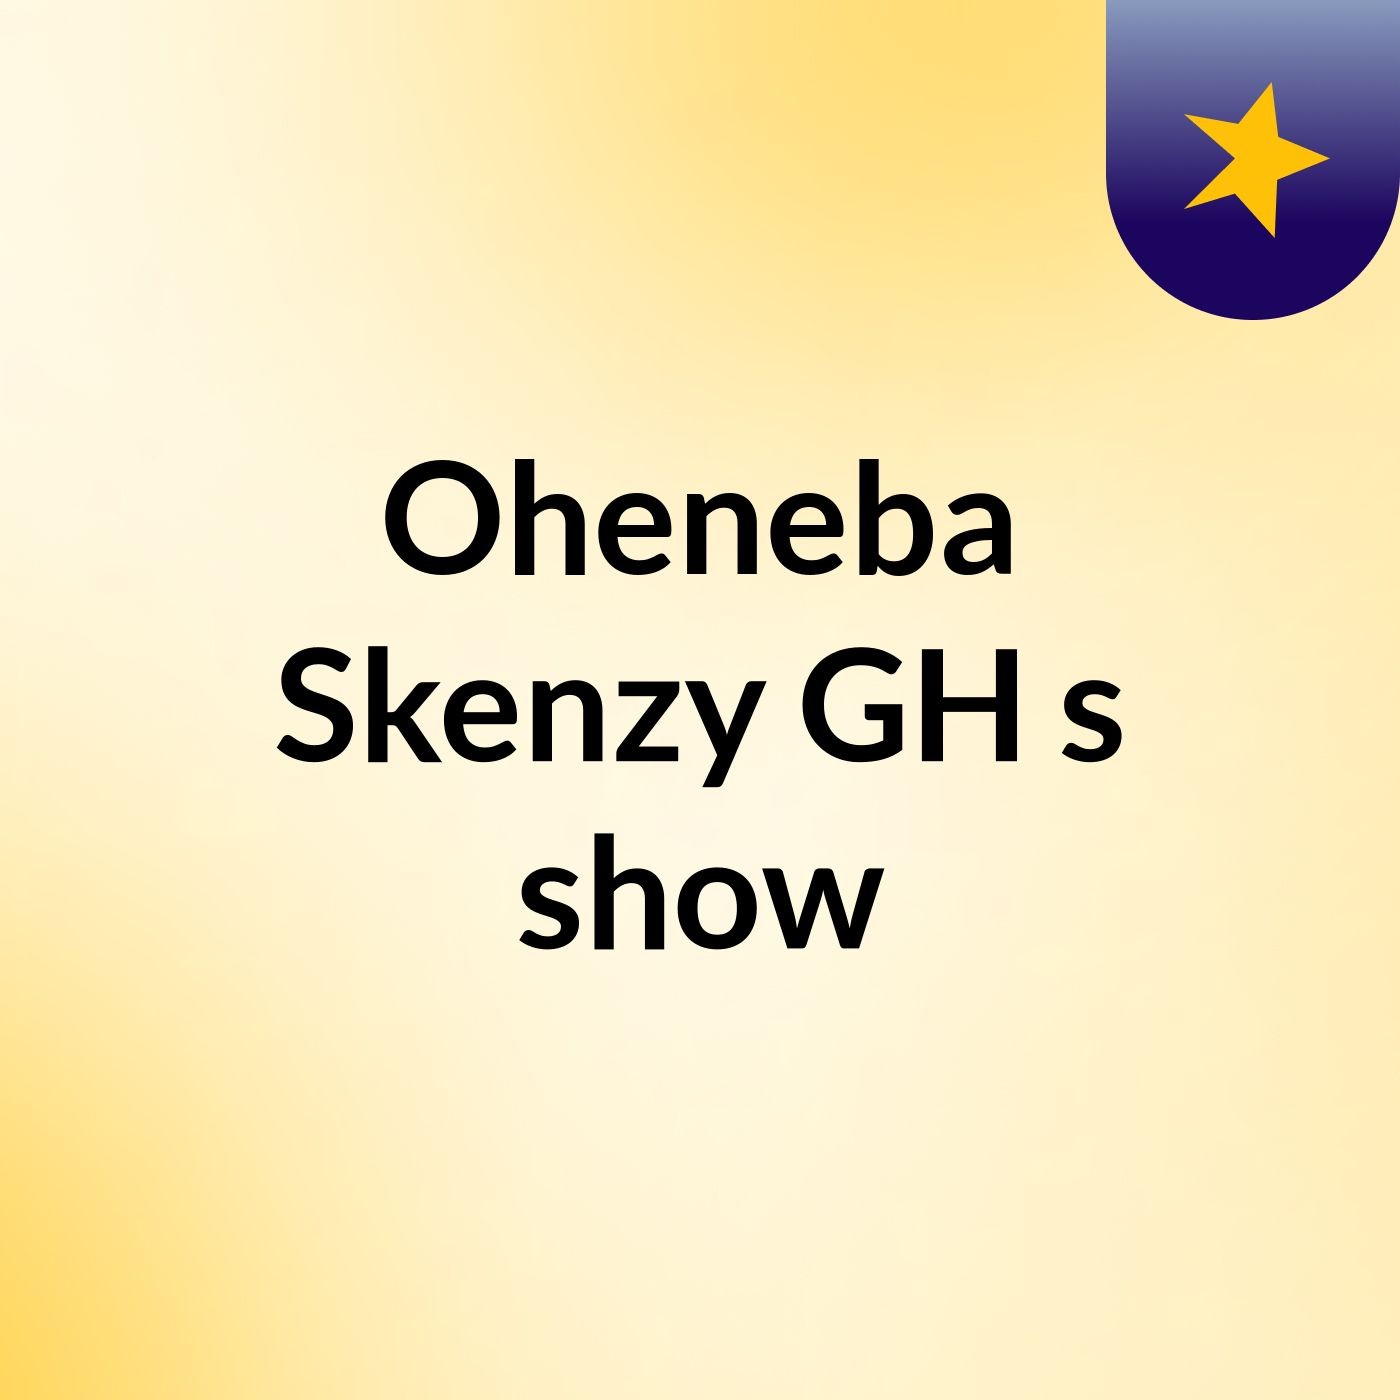 Episode 2 - Oheneba Skenzy GH's show